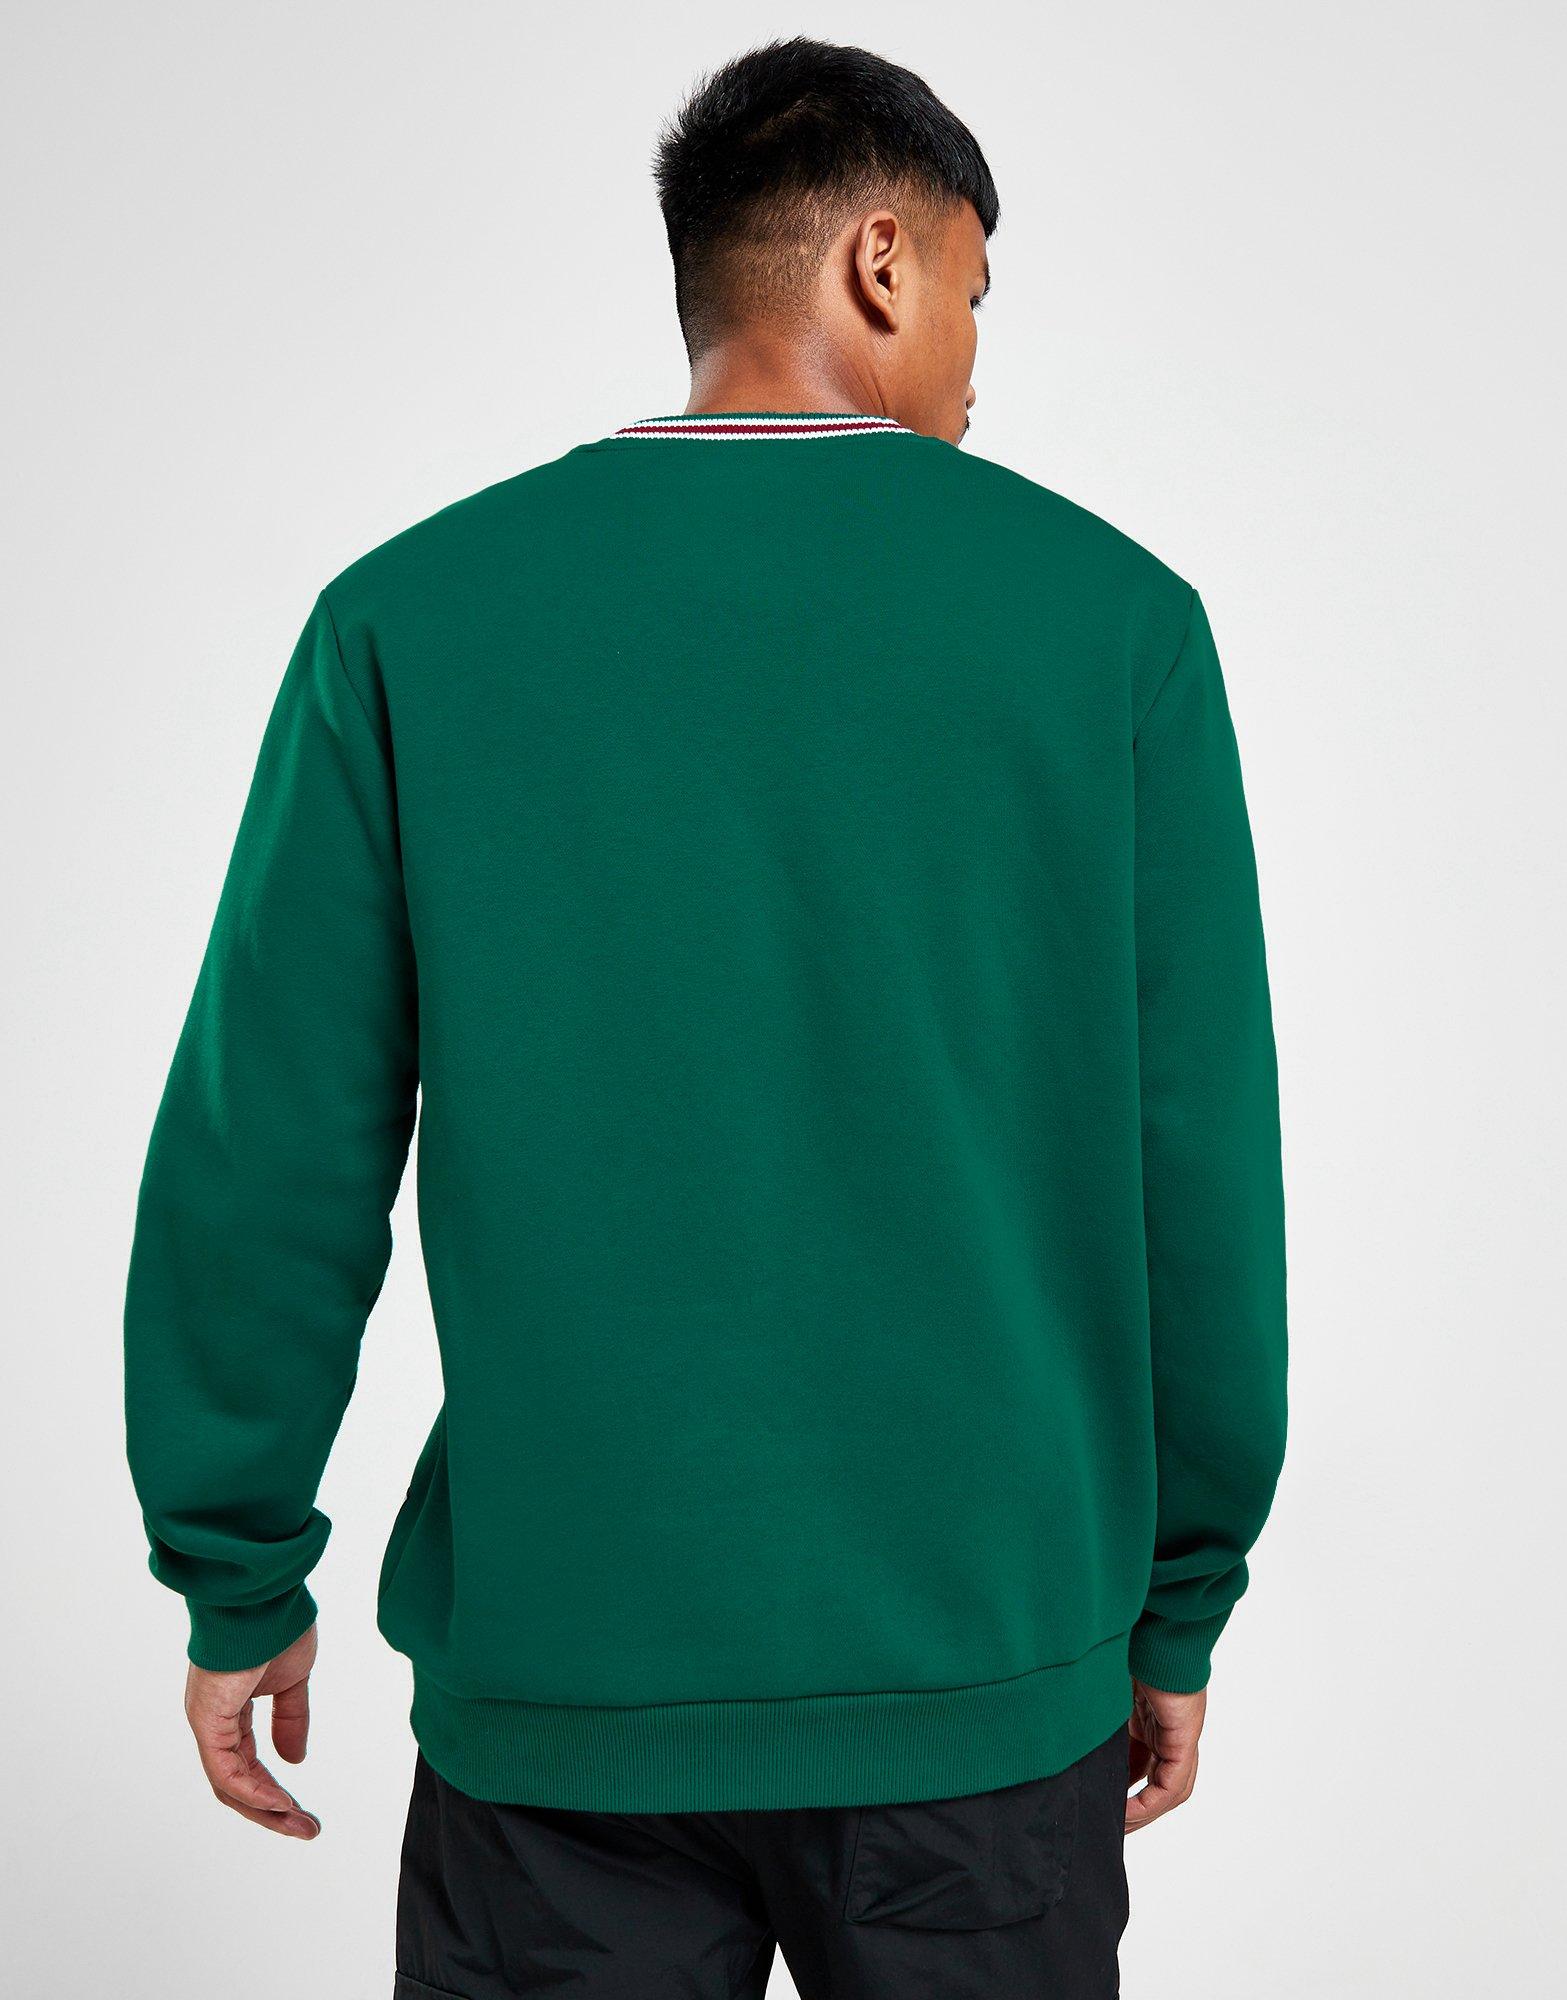 Green adidas Originals Collegiate Crew Sweatshirt - JD Sports Global